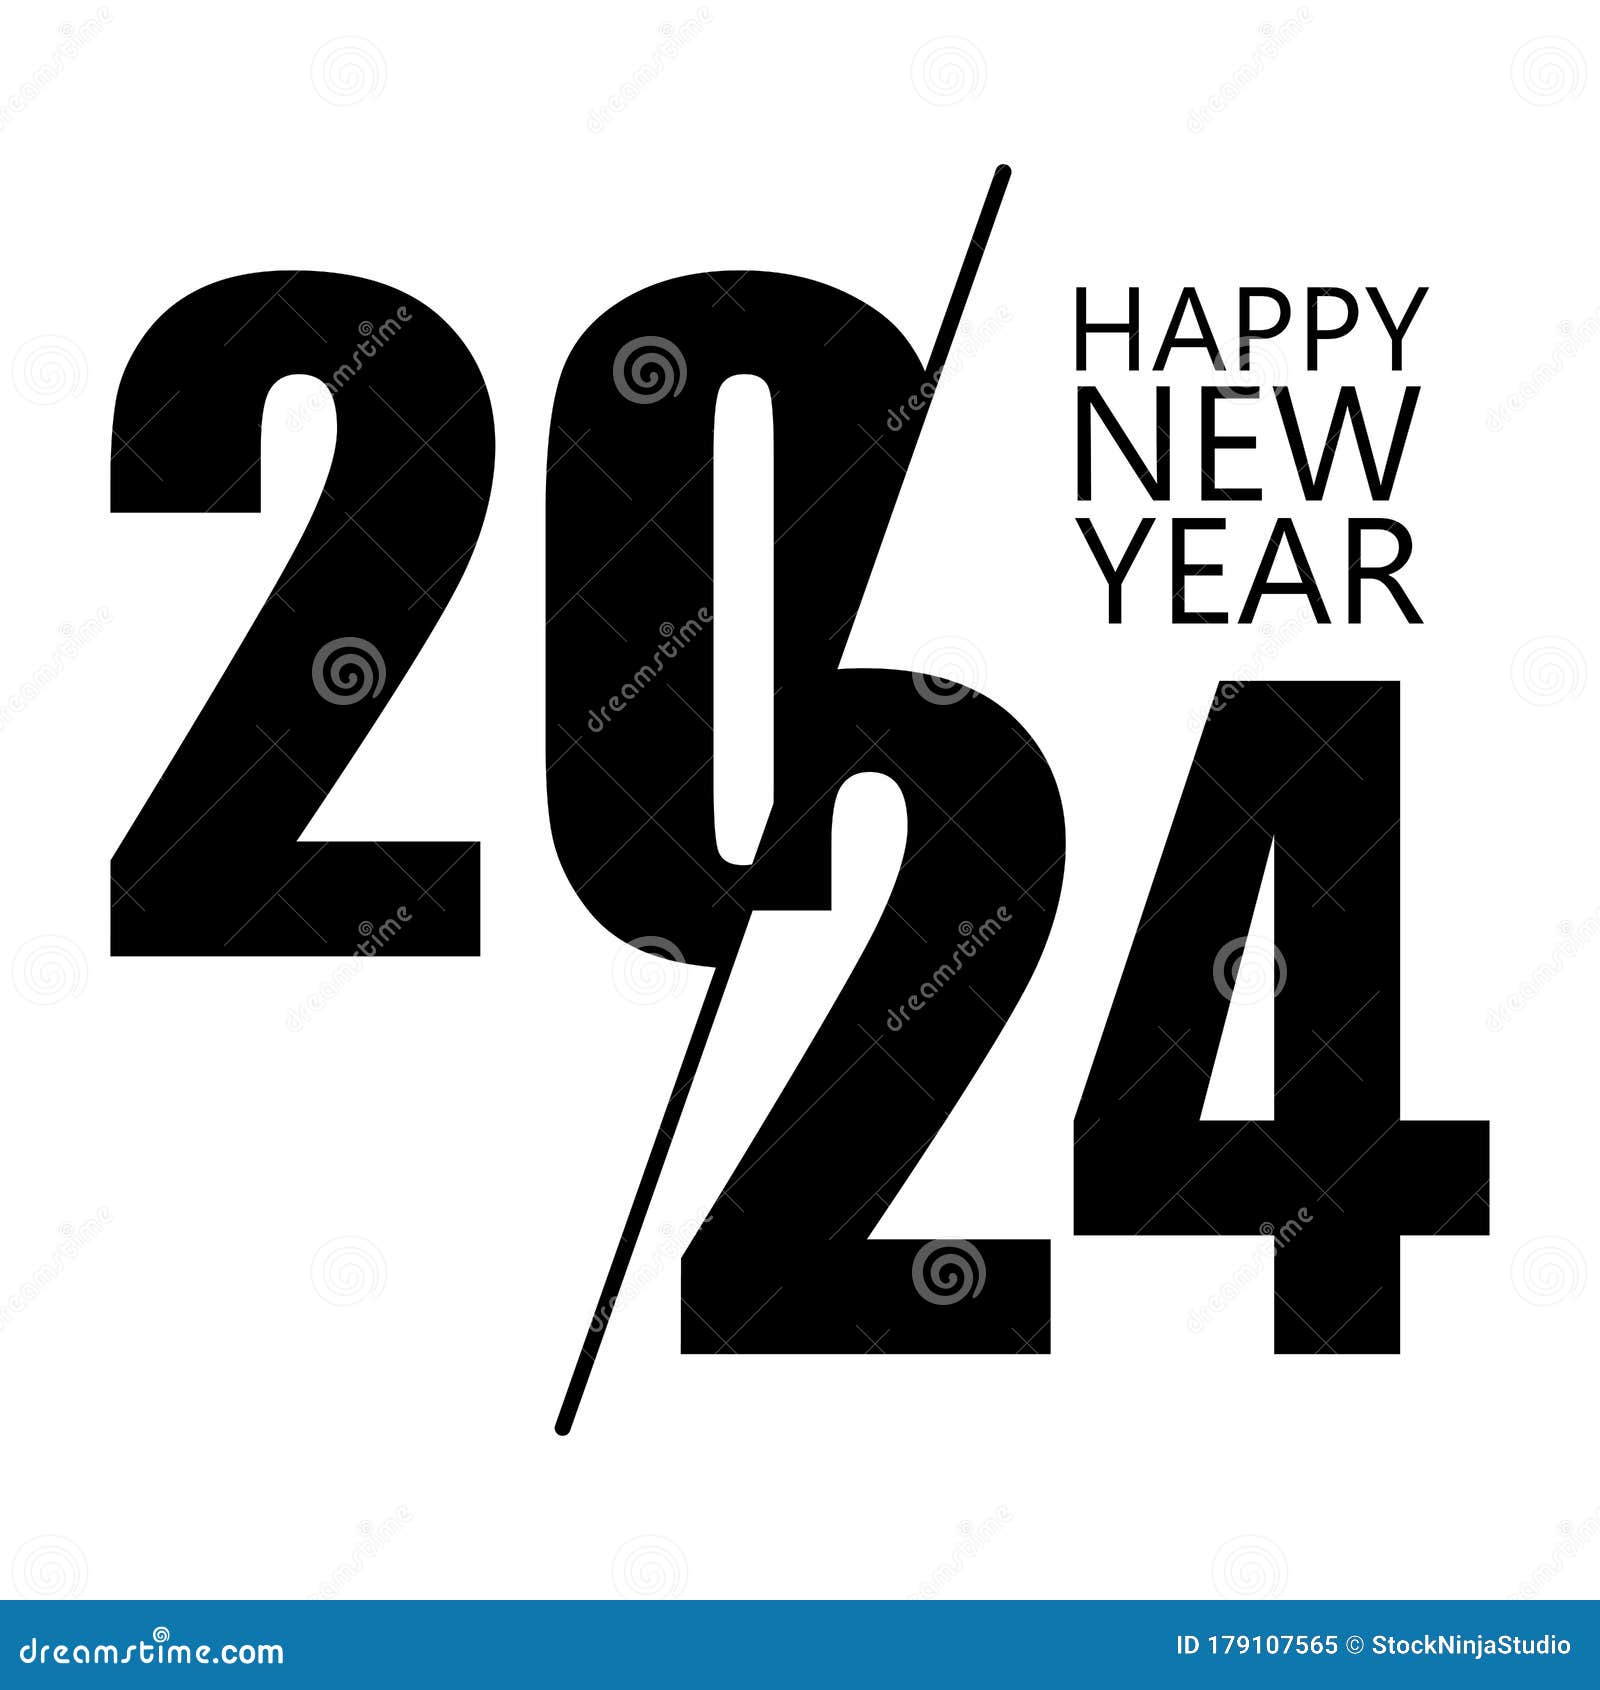 Happy New Year 2024 Design Template. Modern Design for Calendar